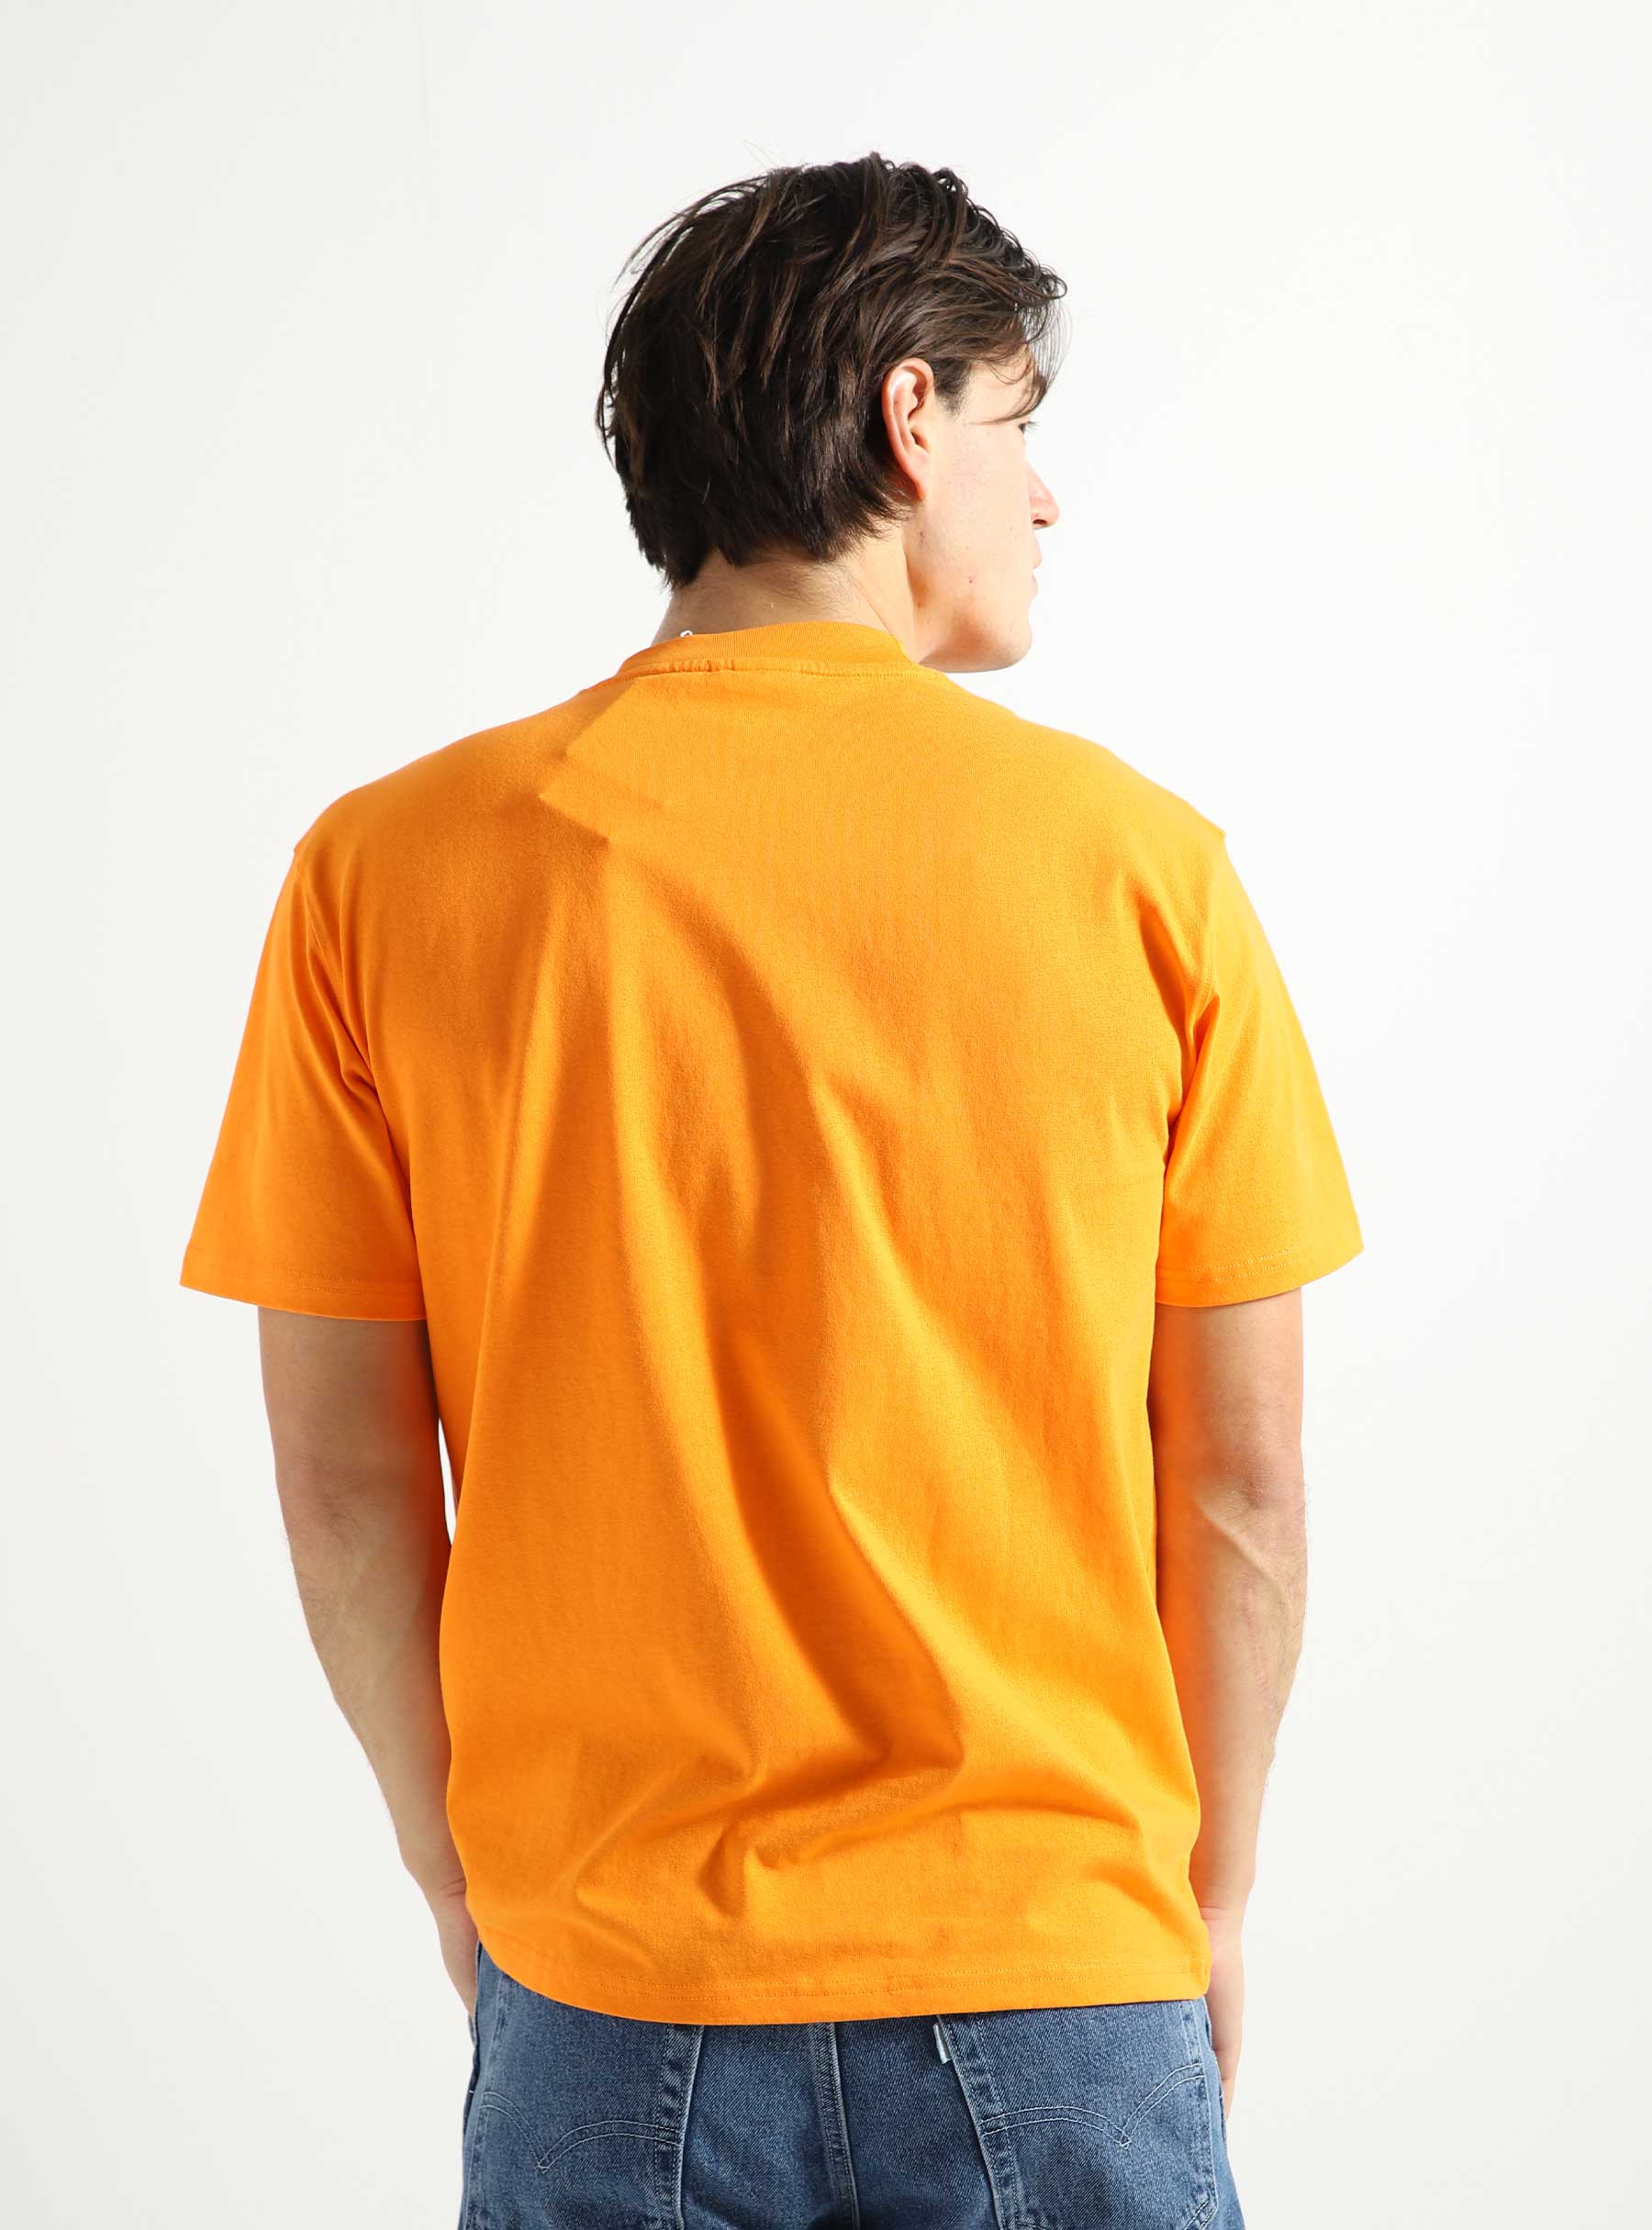 Puma Puma x Pleasures Typo T-shirt Orange - Freshcotton